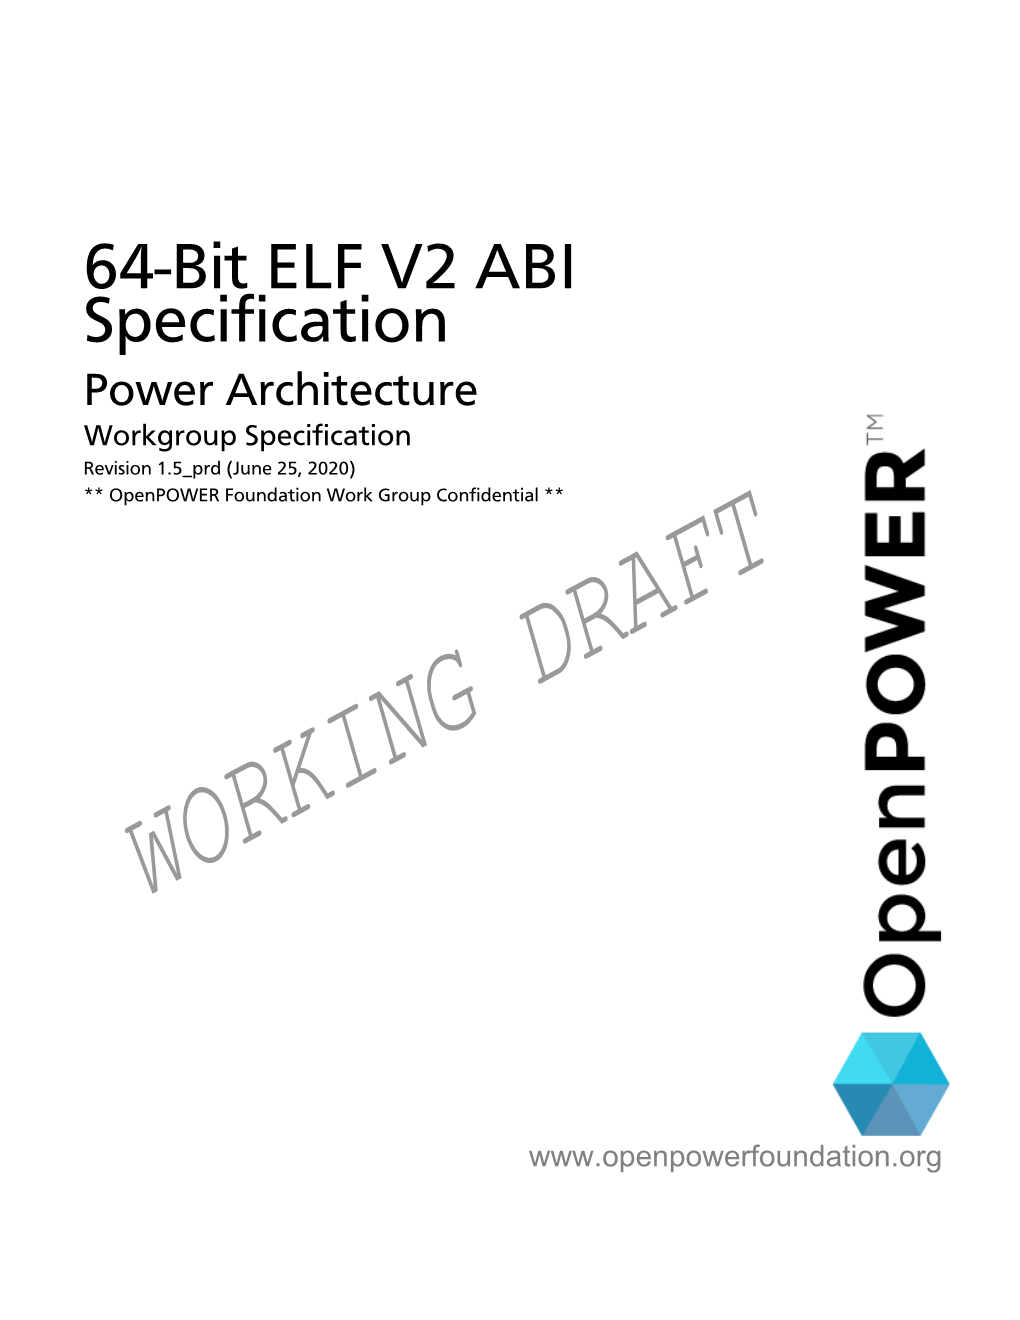 64-Bit ELF V2 ABI Specification June 25, 2020 Revision 1.5 Prd